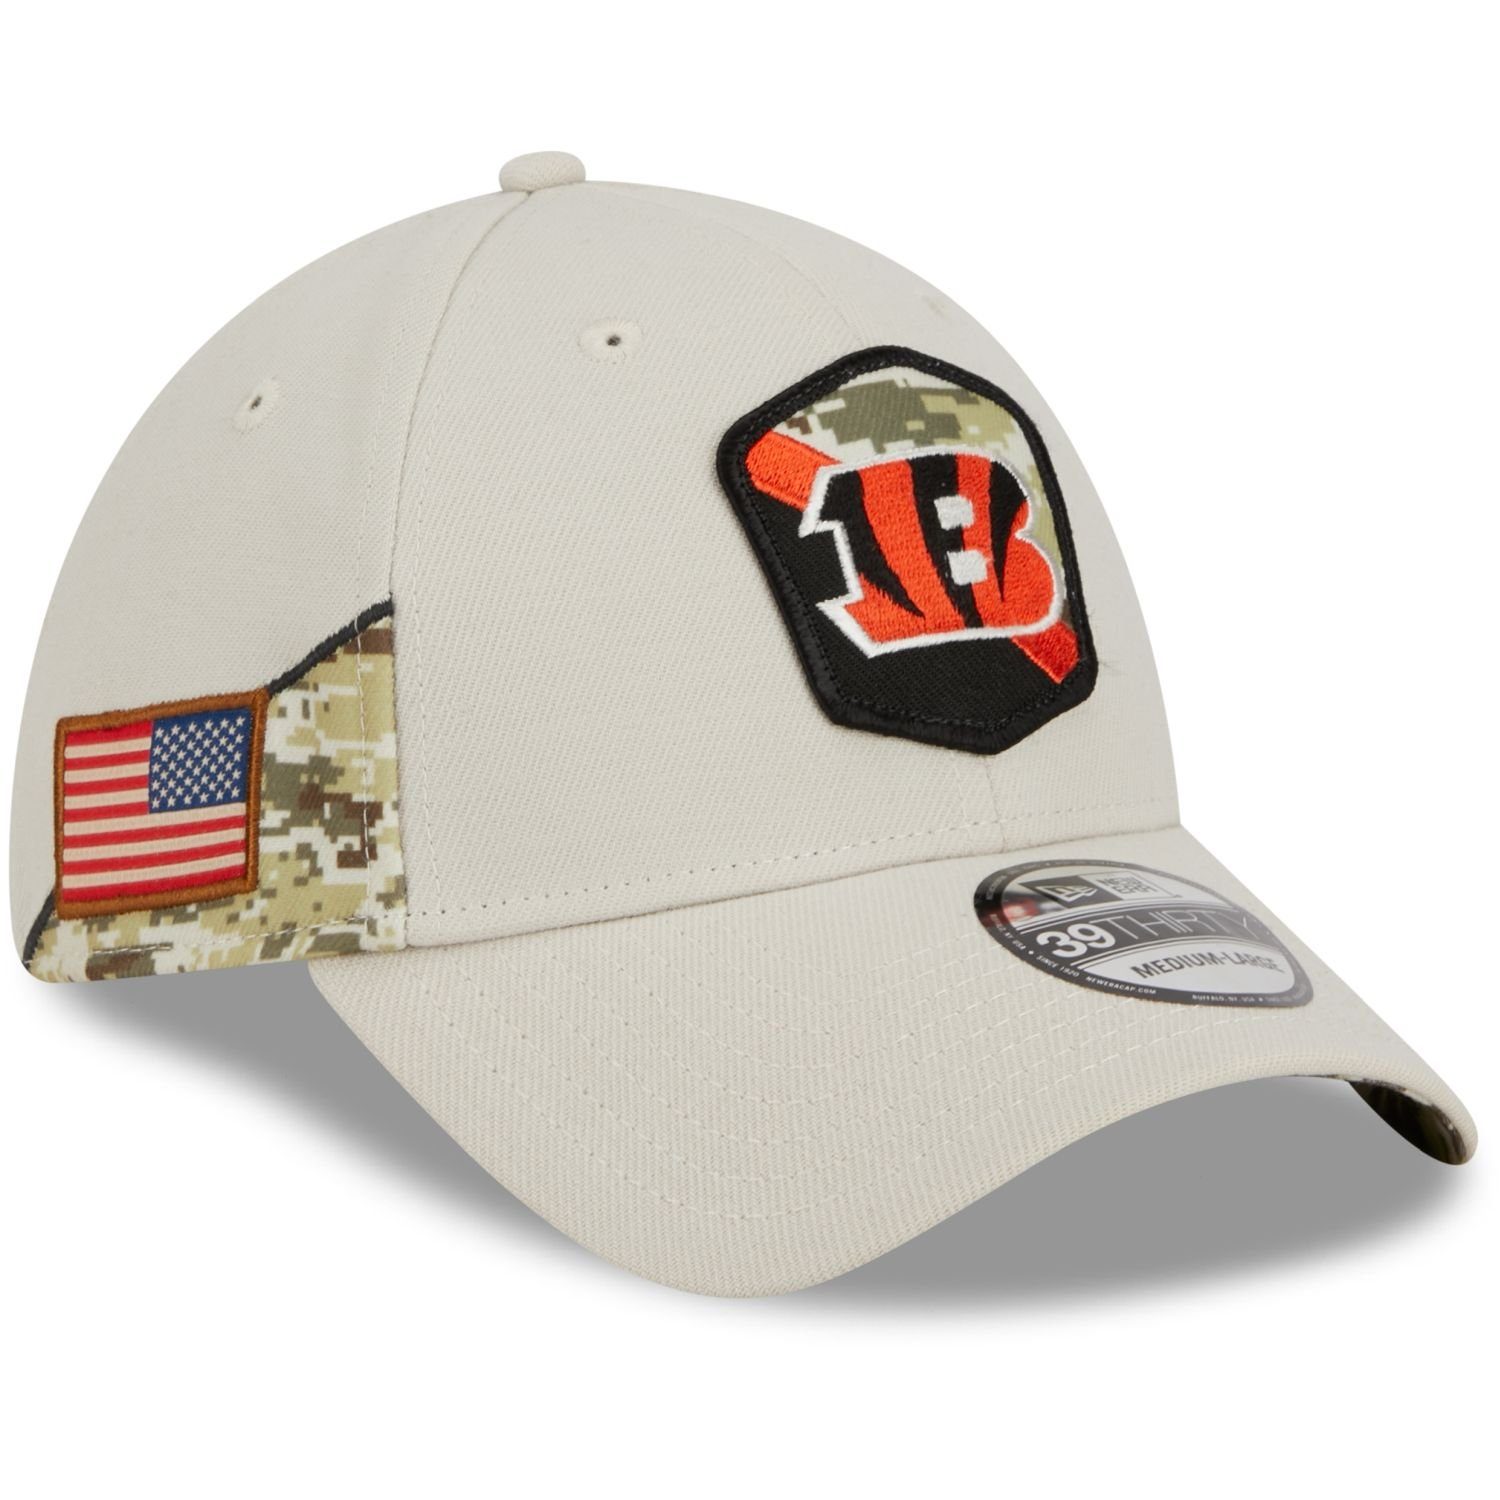 New Era Flex Cap 39Thirty StretchFit NFL Salute to Service Cincinnati Bengals